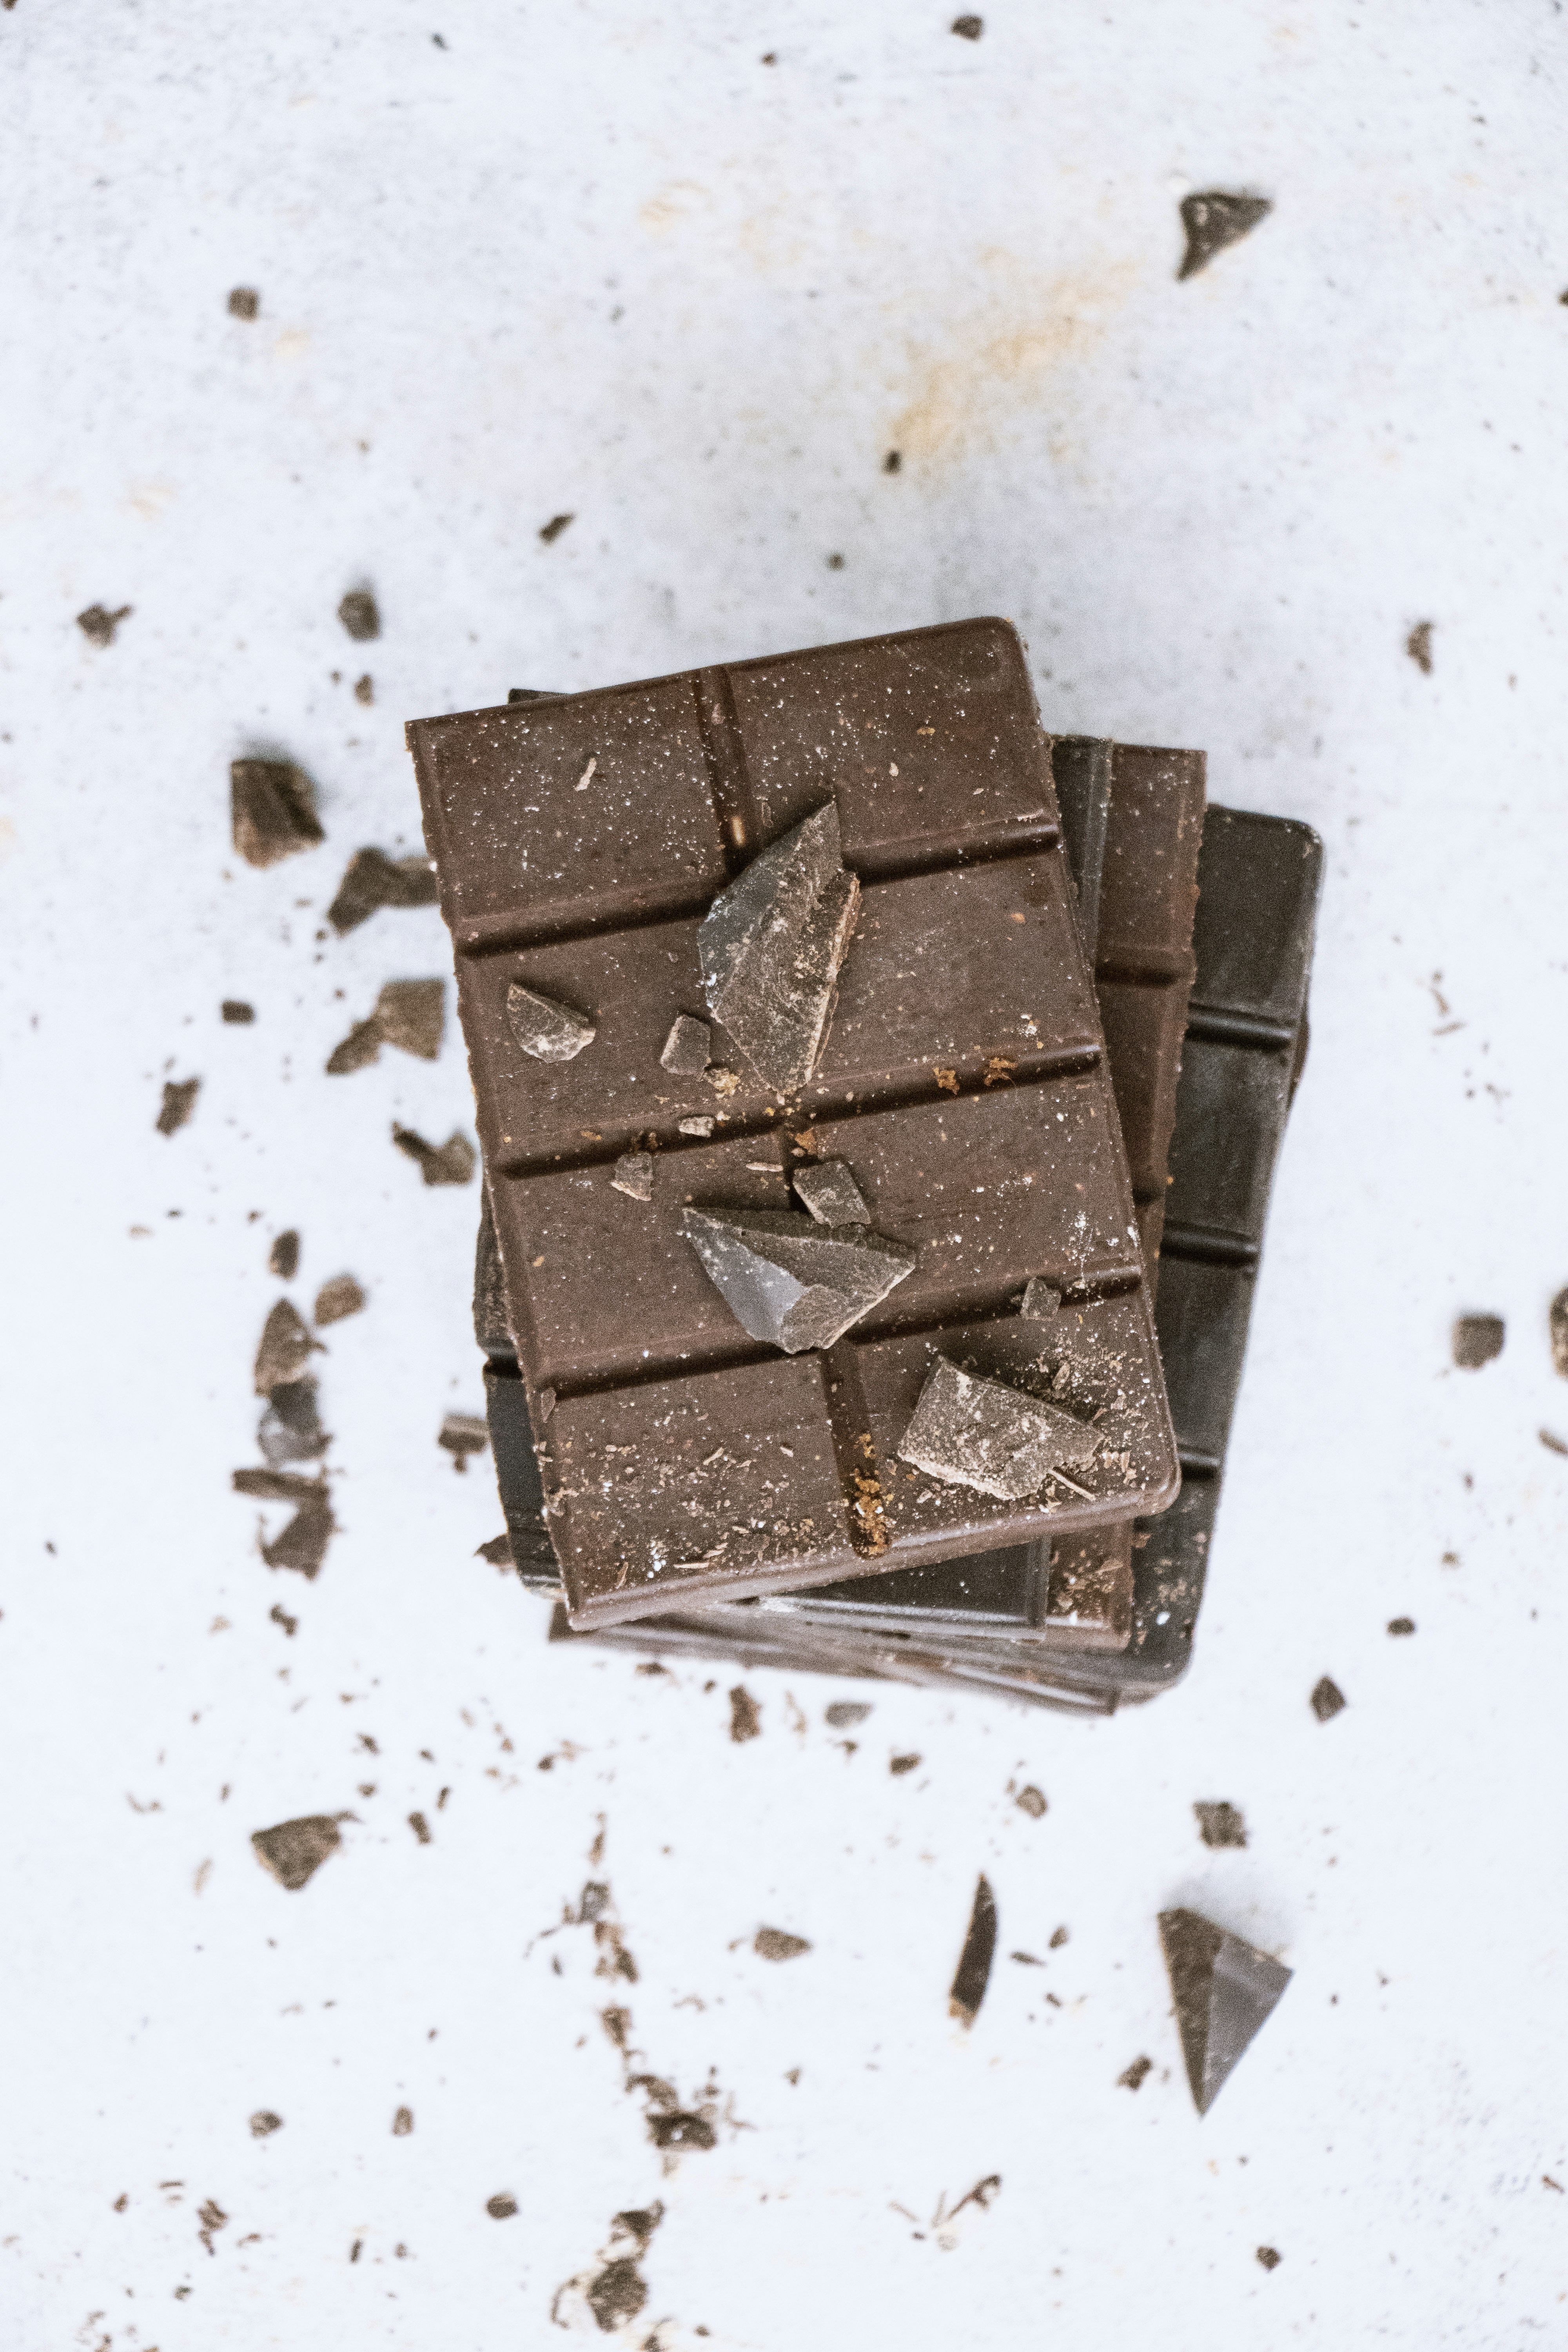 7 Proven Health Benefits of Dark Chocolate